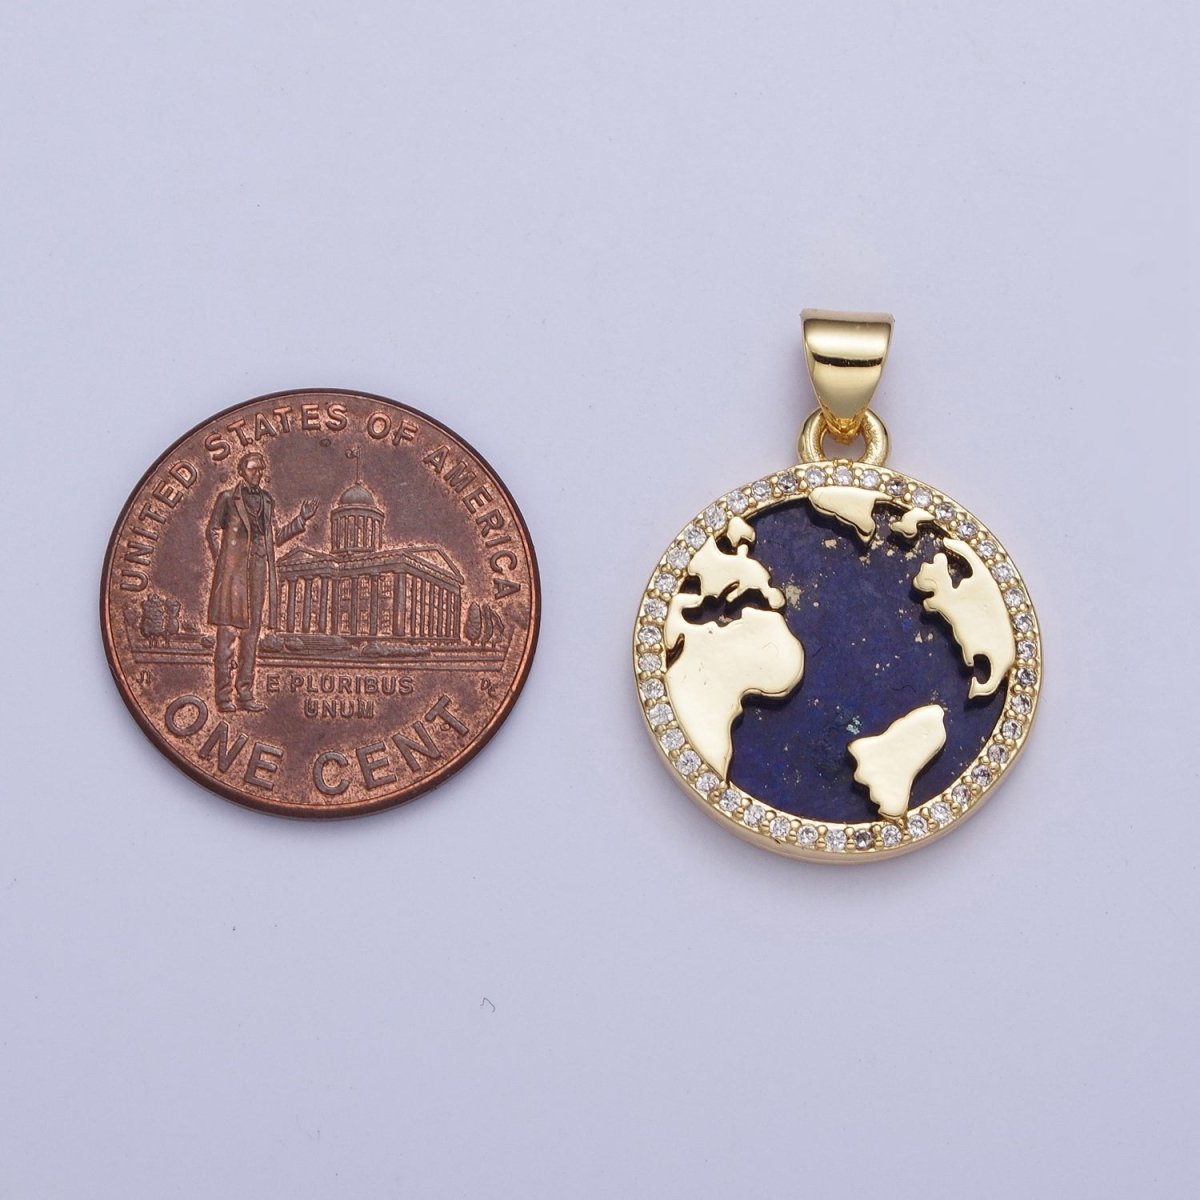 24K Gold Filled Micro Pave CZ Blue Lapiz Globe World Map Medallion Pendant For Traveler Gift X-426 - DLUXCA